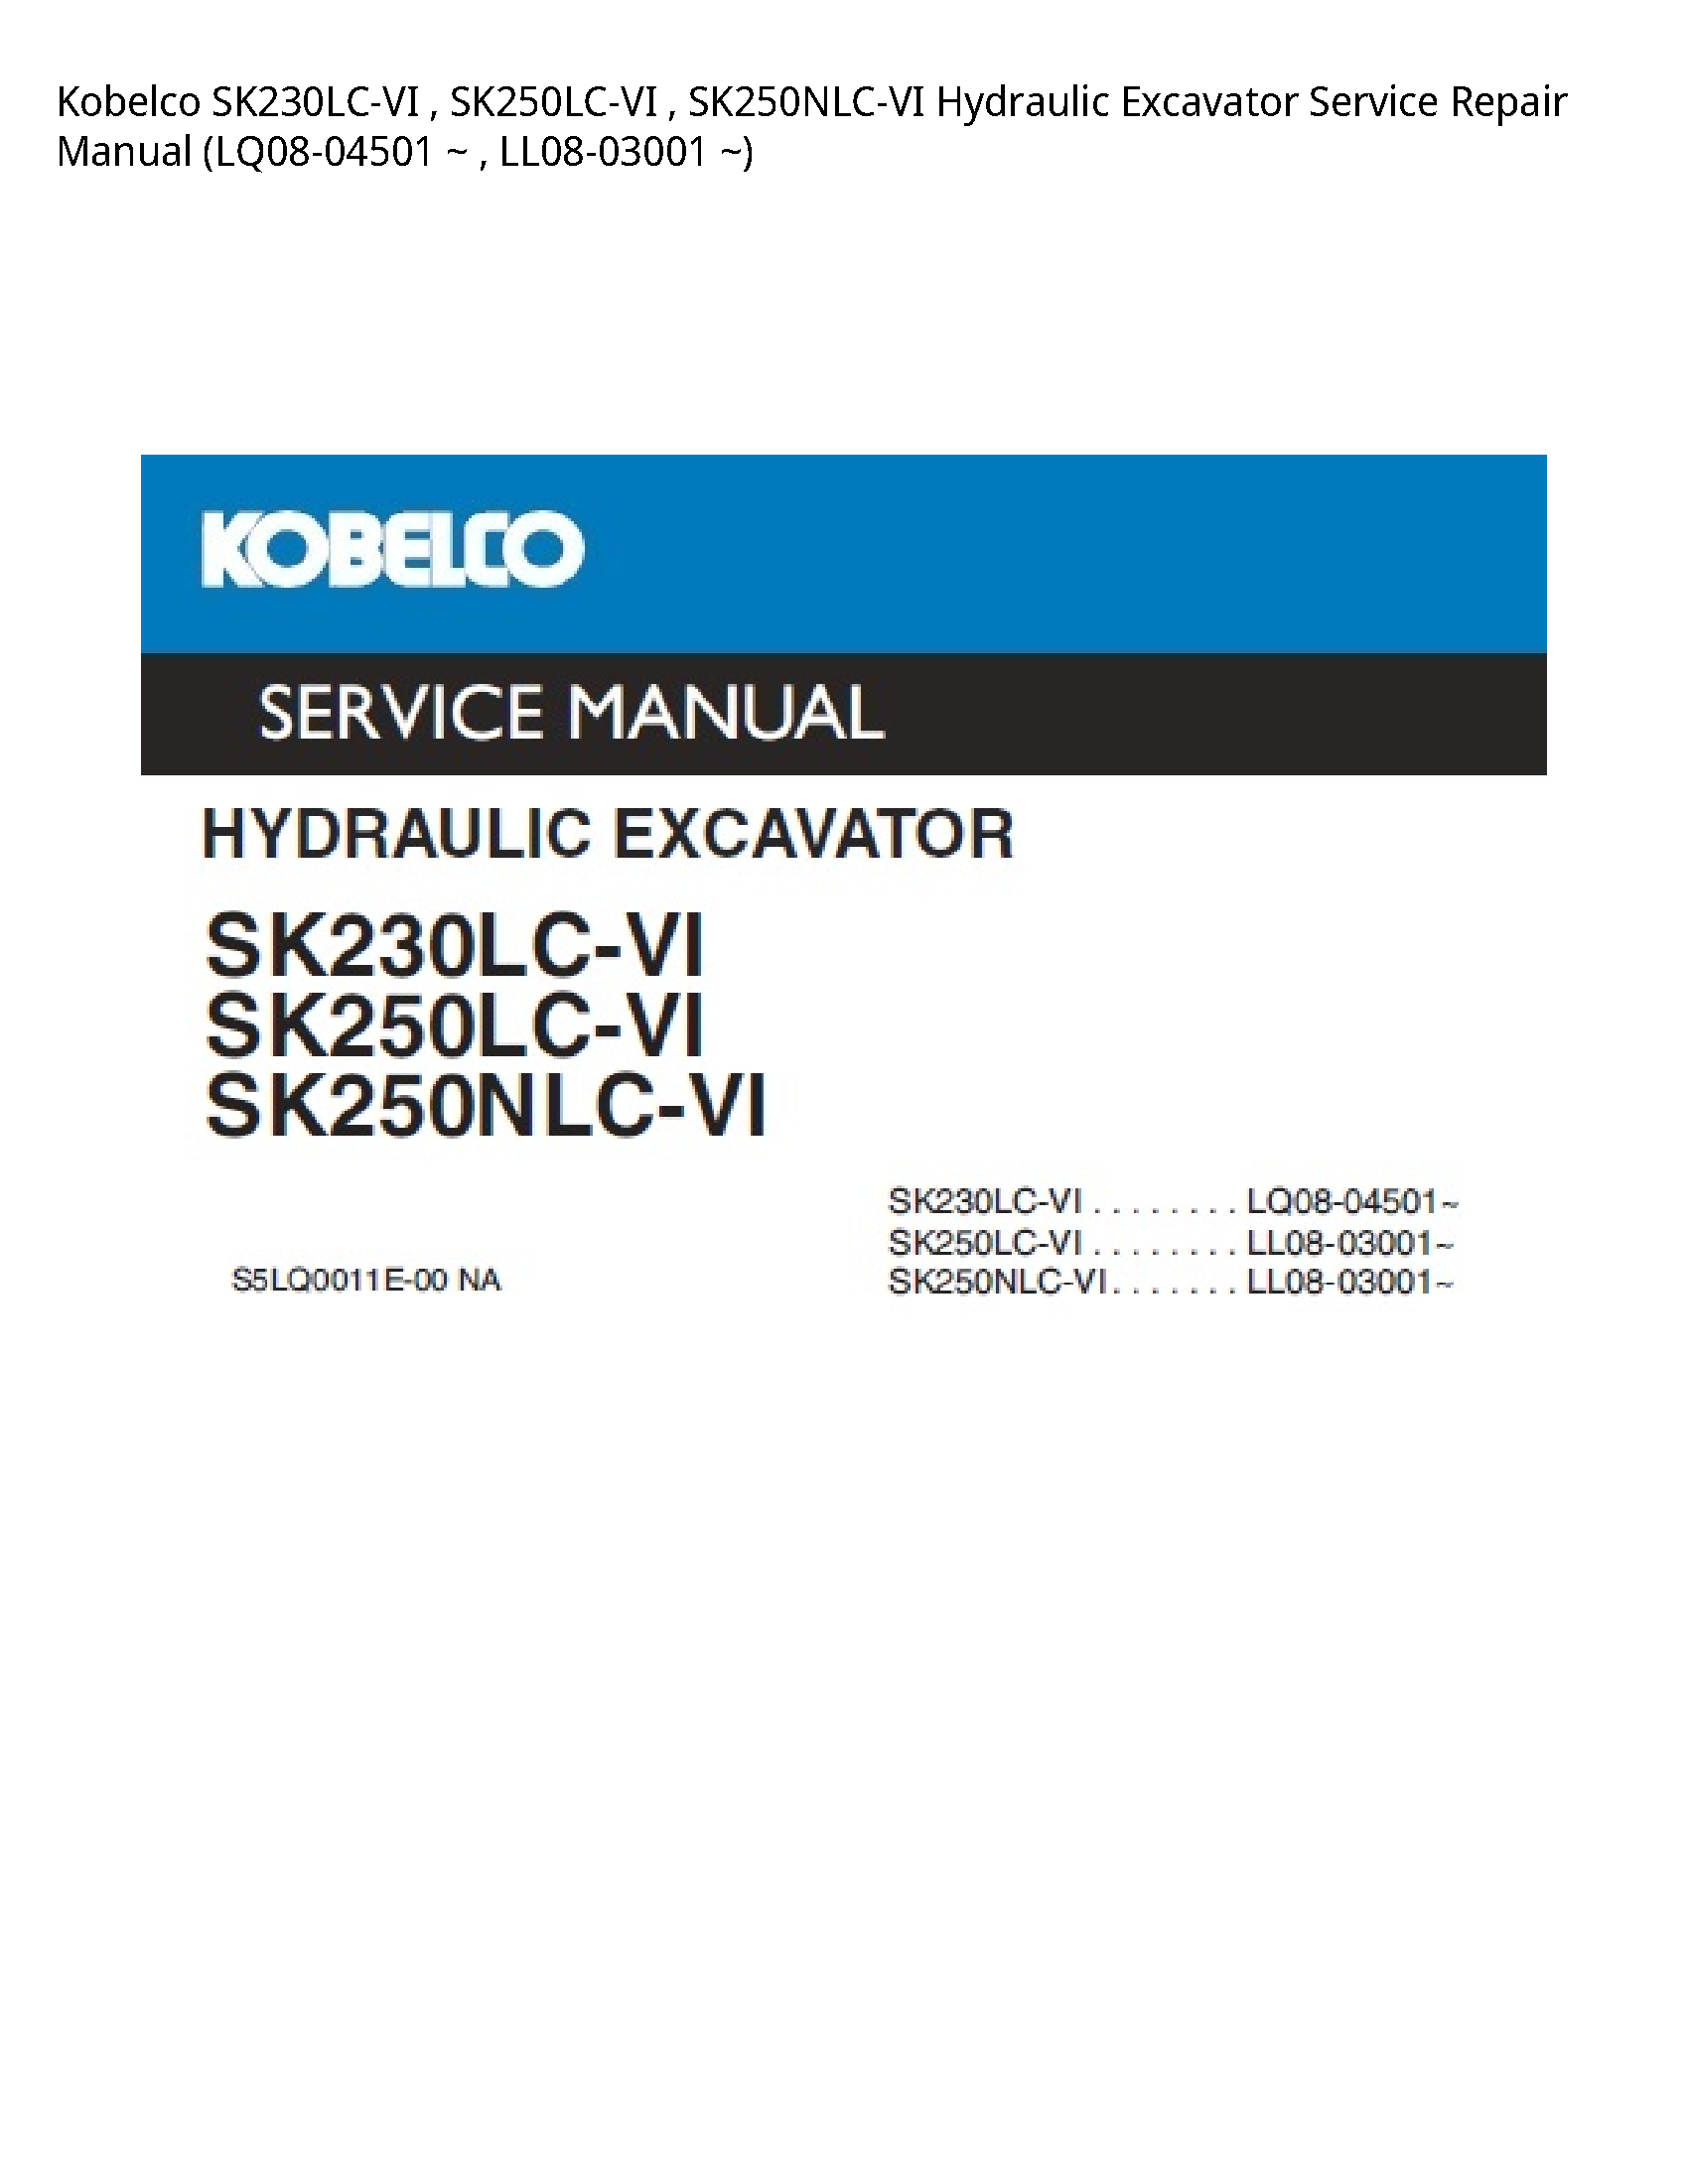 Kobelco SK230LC-VI Hydraulic Excavator manual